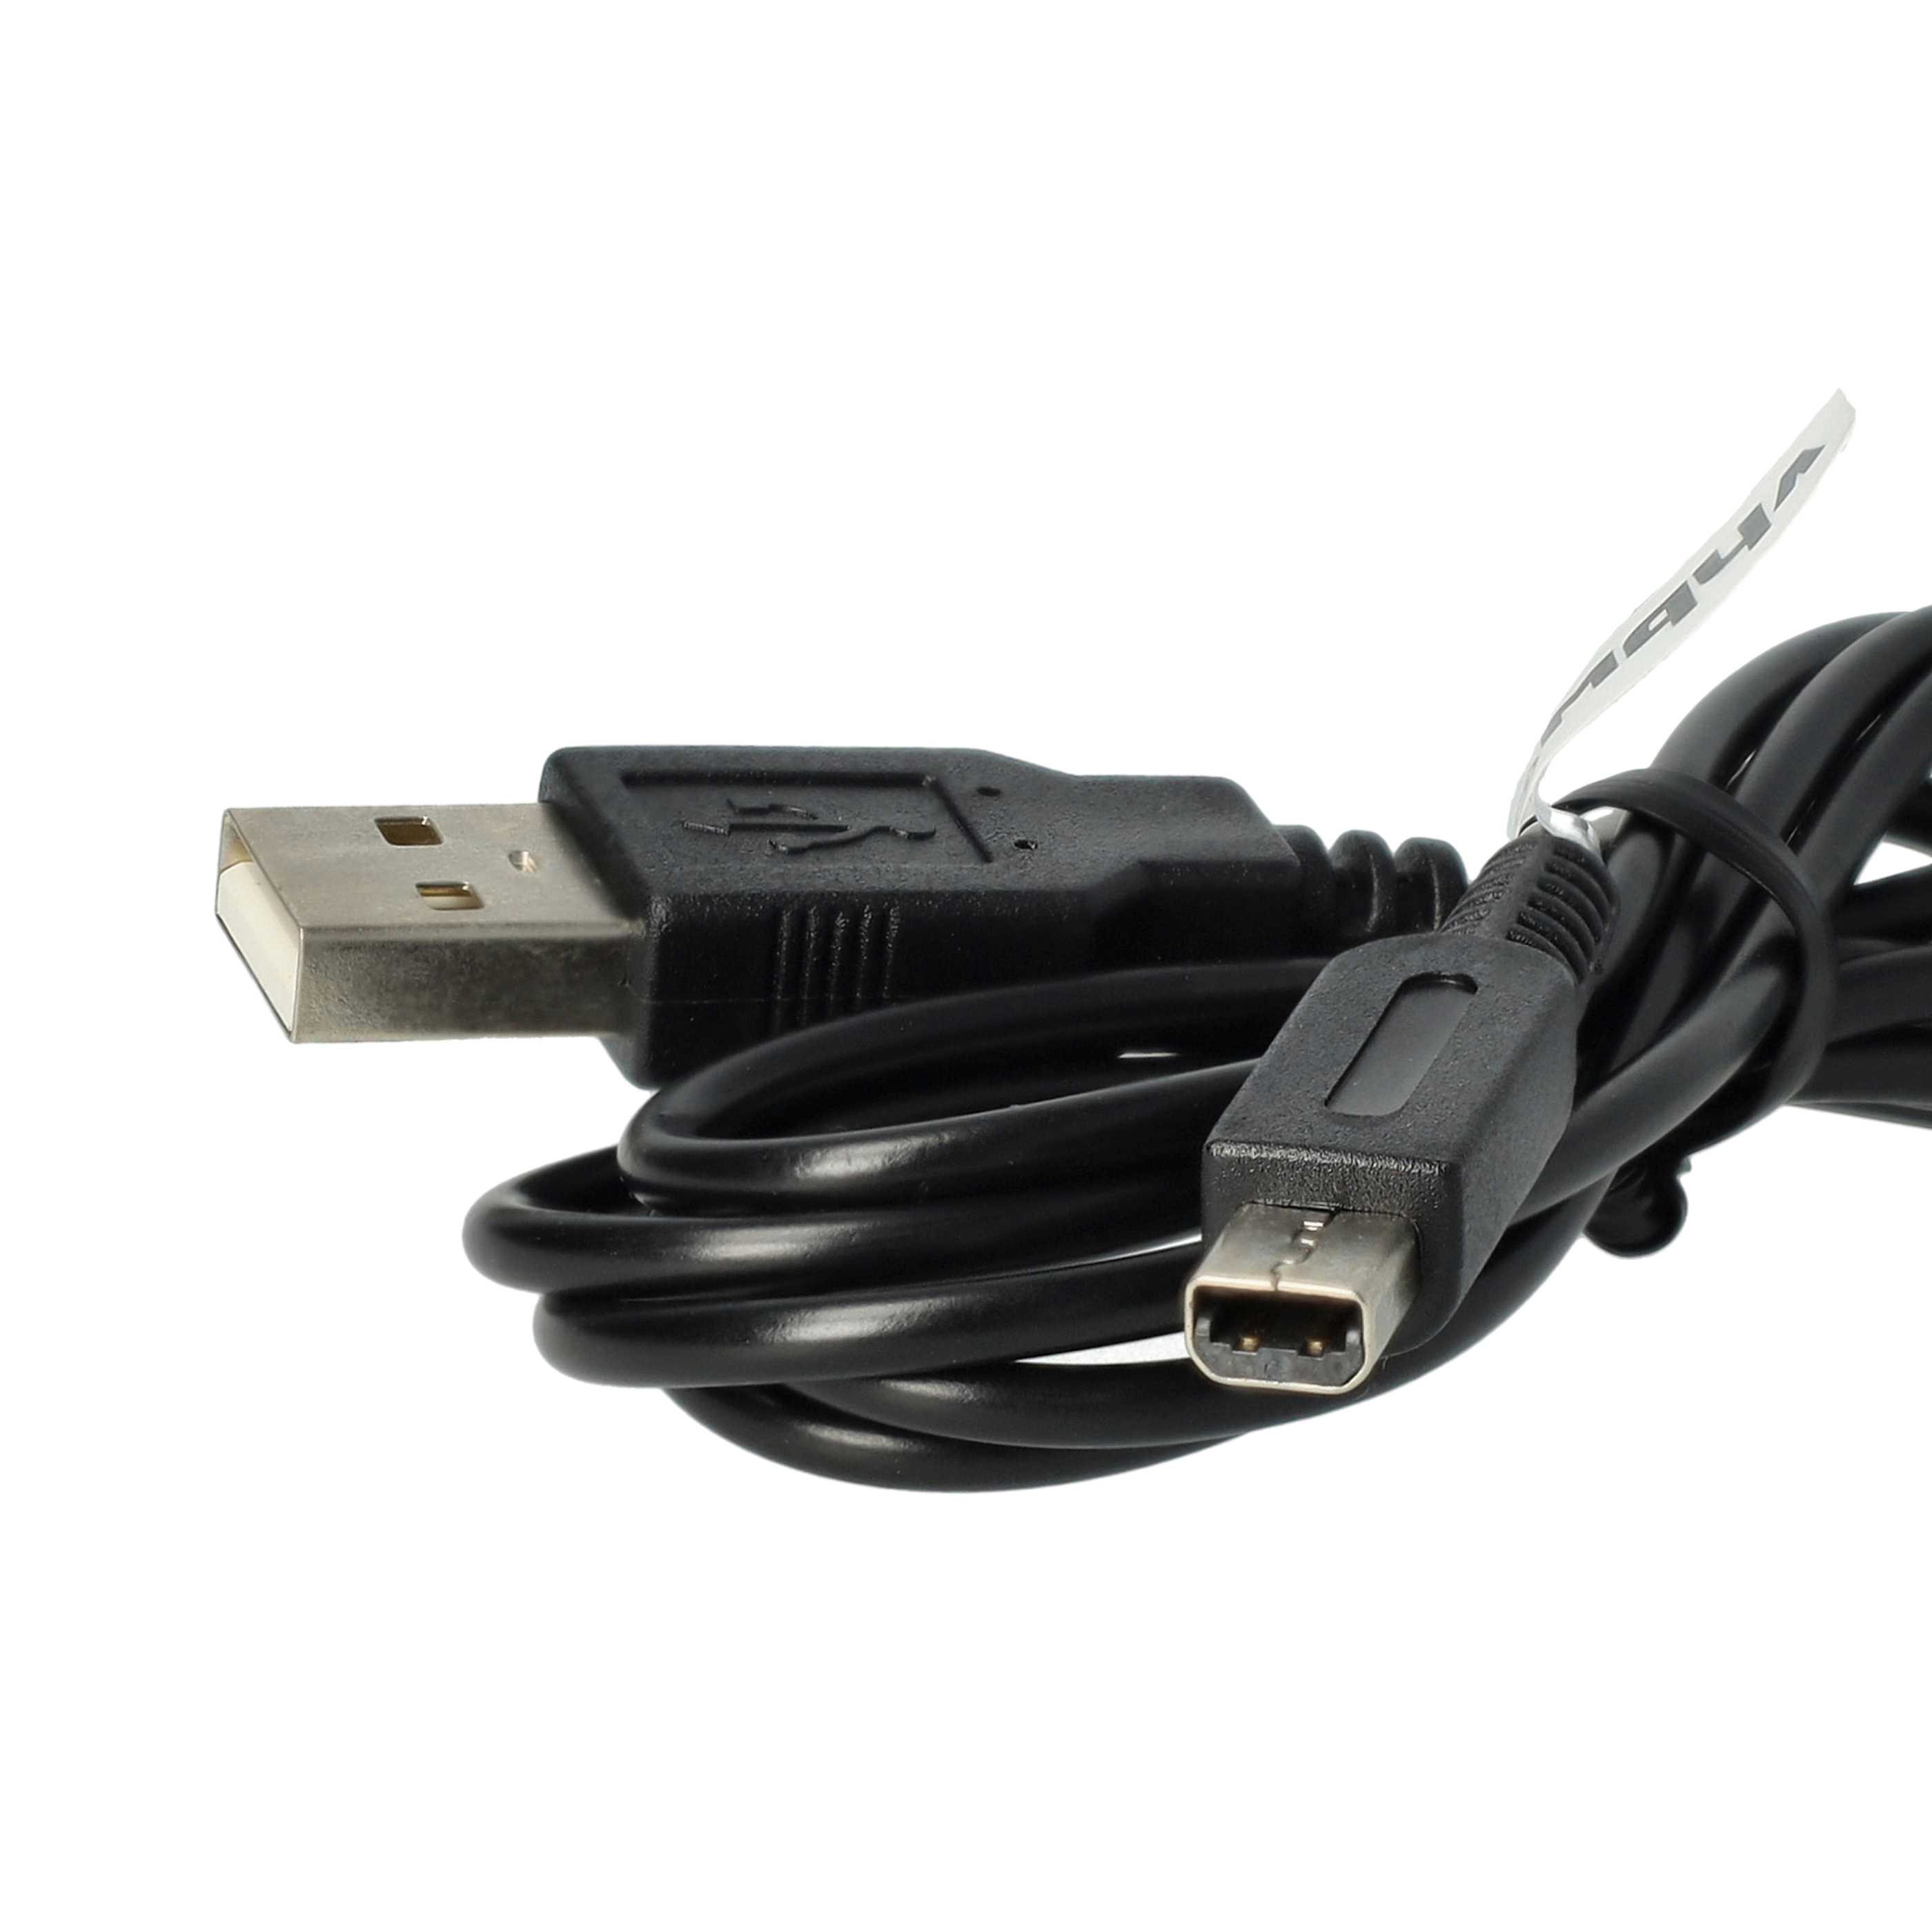 vhbw USB Kabel Spielekonsole - Verbindungskabel 1,2m Lang